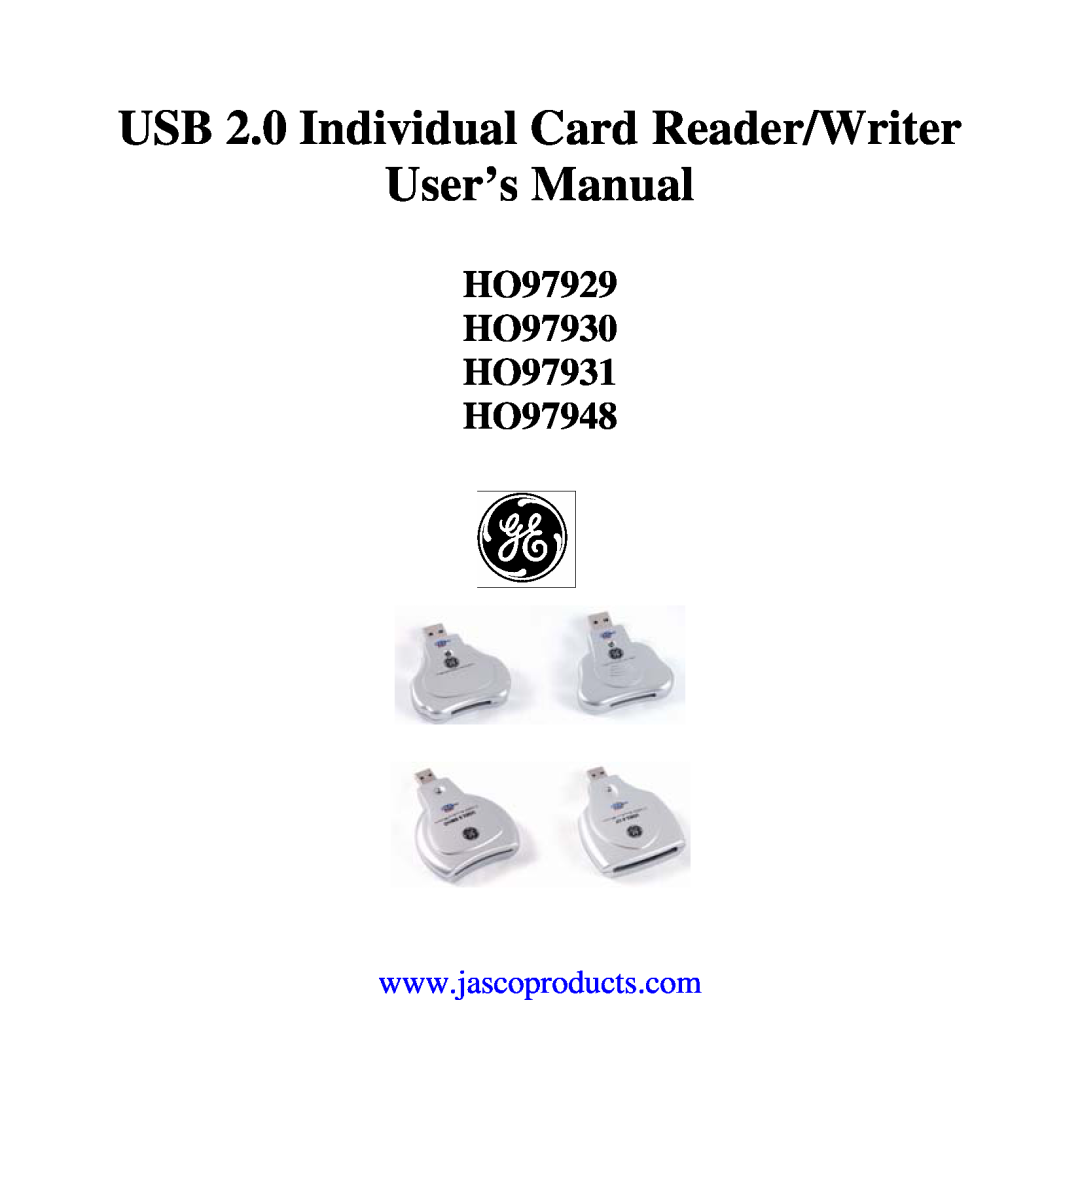 Jasco user manual USB 2.0 Individual Card Reader/Writer User’s Manual, HO97929 HO97930 HO97931 HO97948 